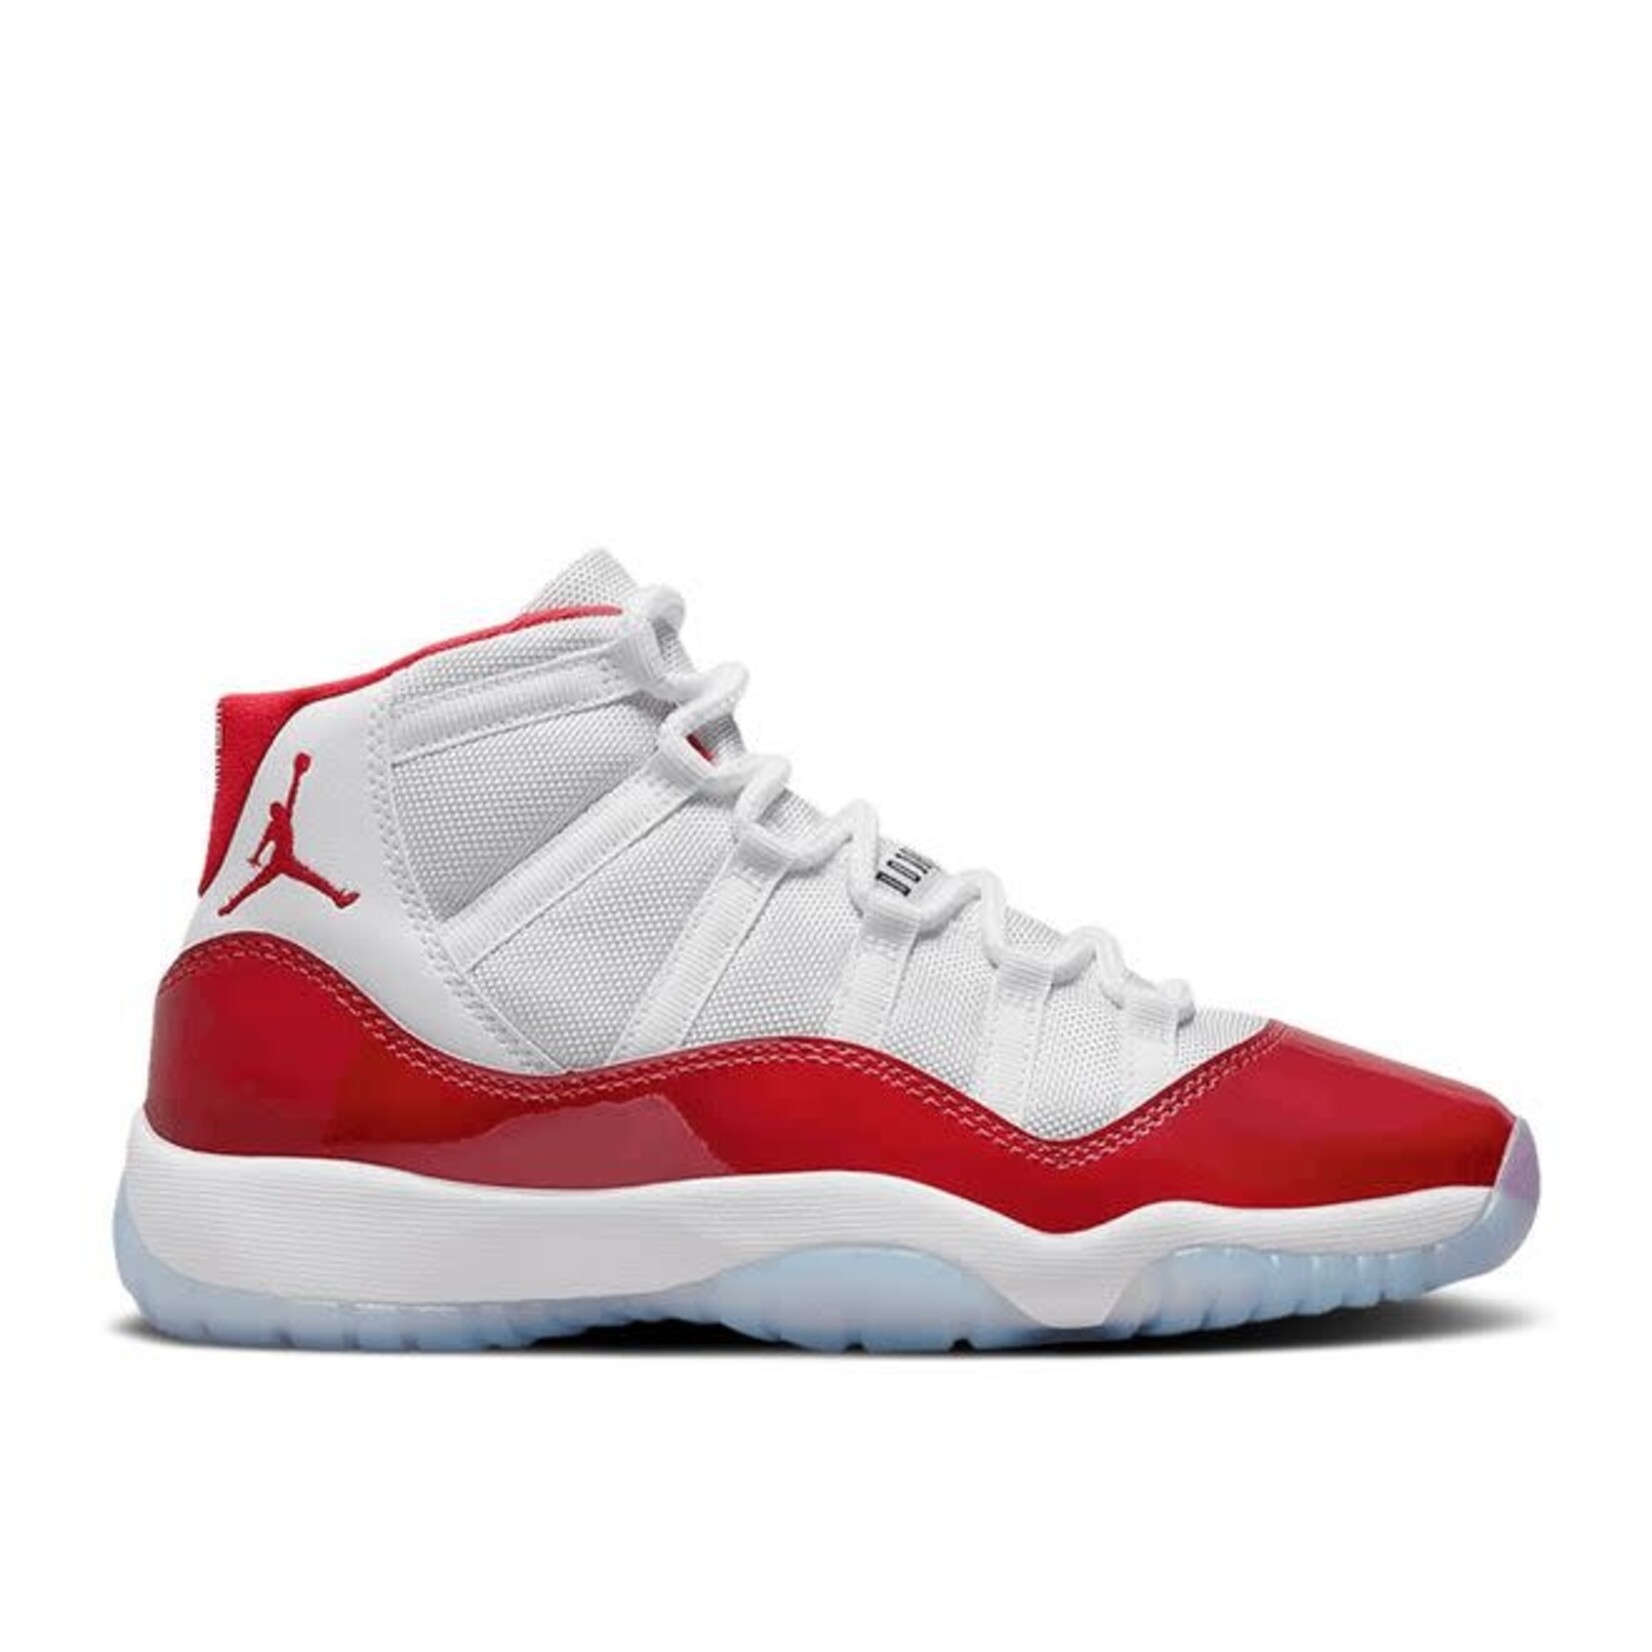 Jordan Jordan 11 Retro Cherry (2022) (GS) Size 4, DS BRAND NEW